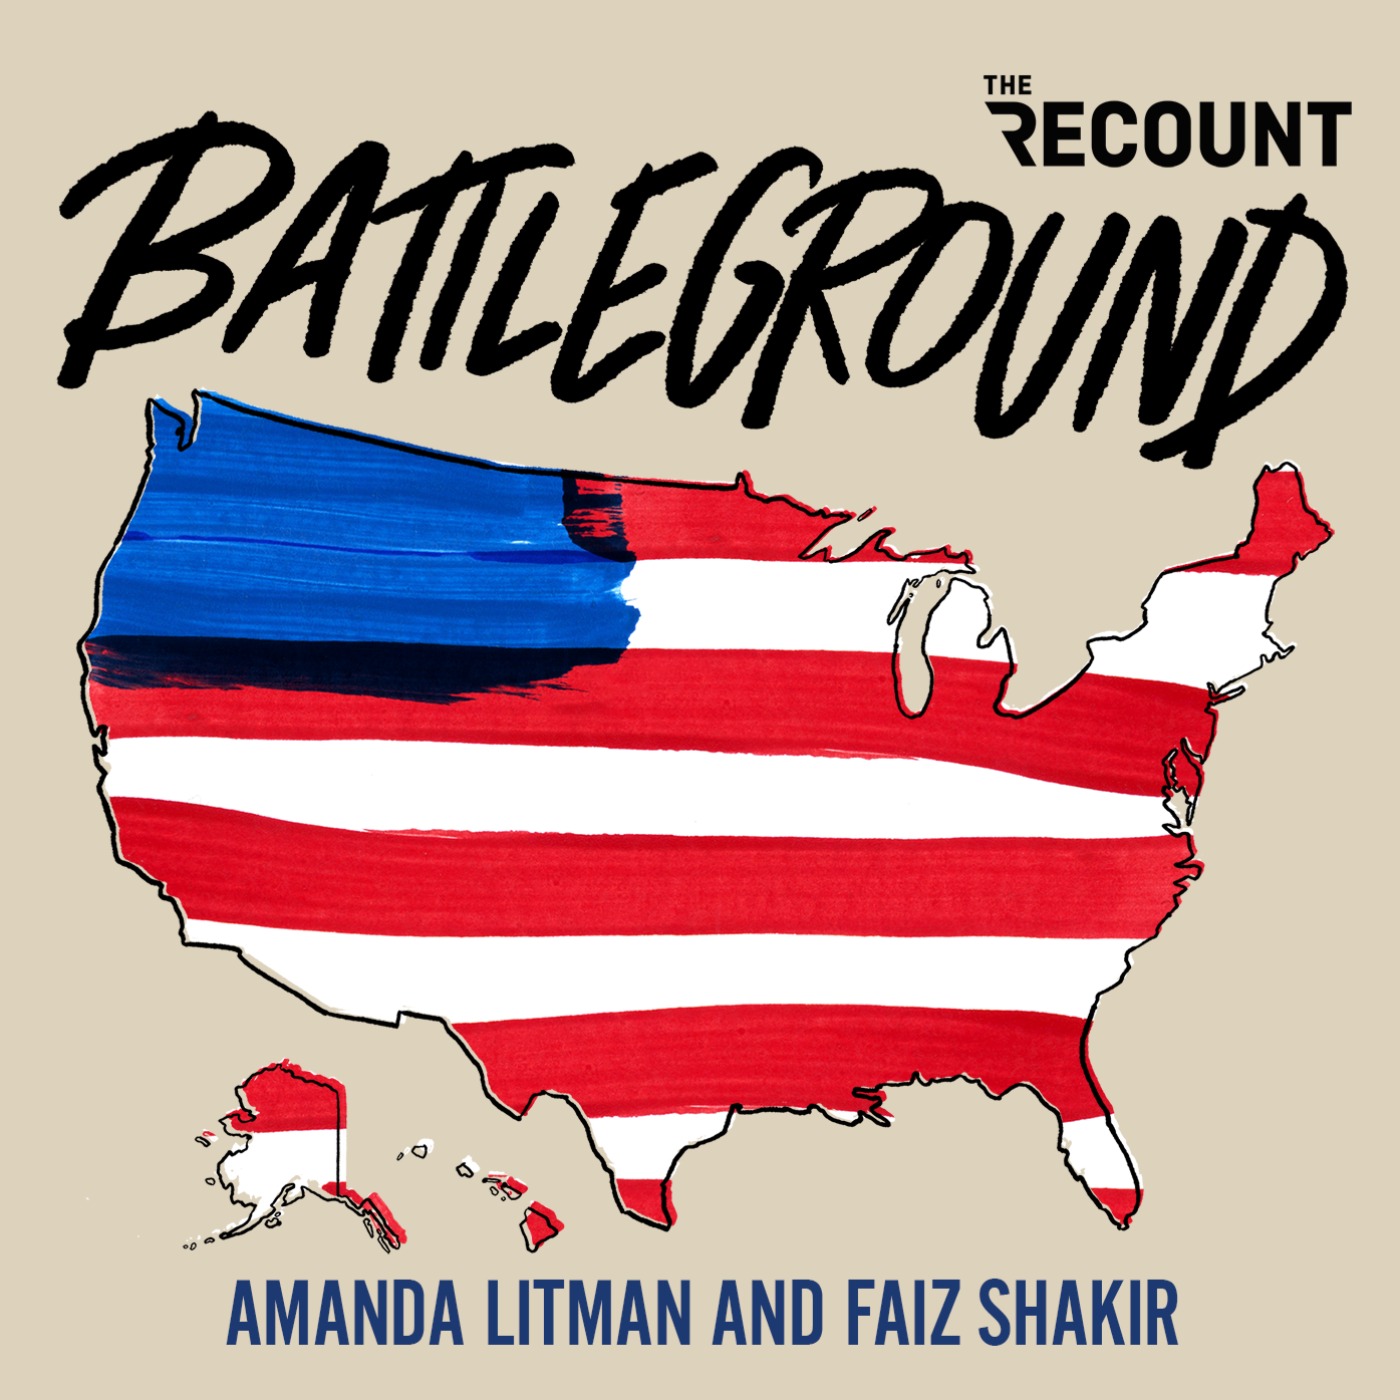 Battleground with Amanda Litman and Faiz Shakir